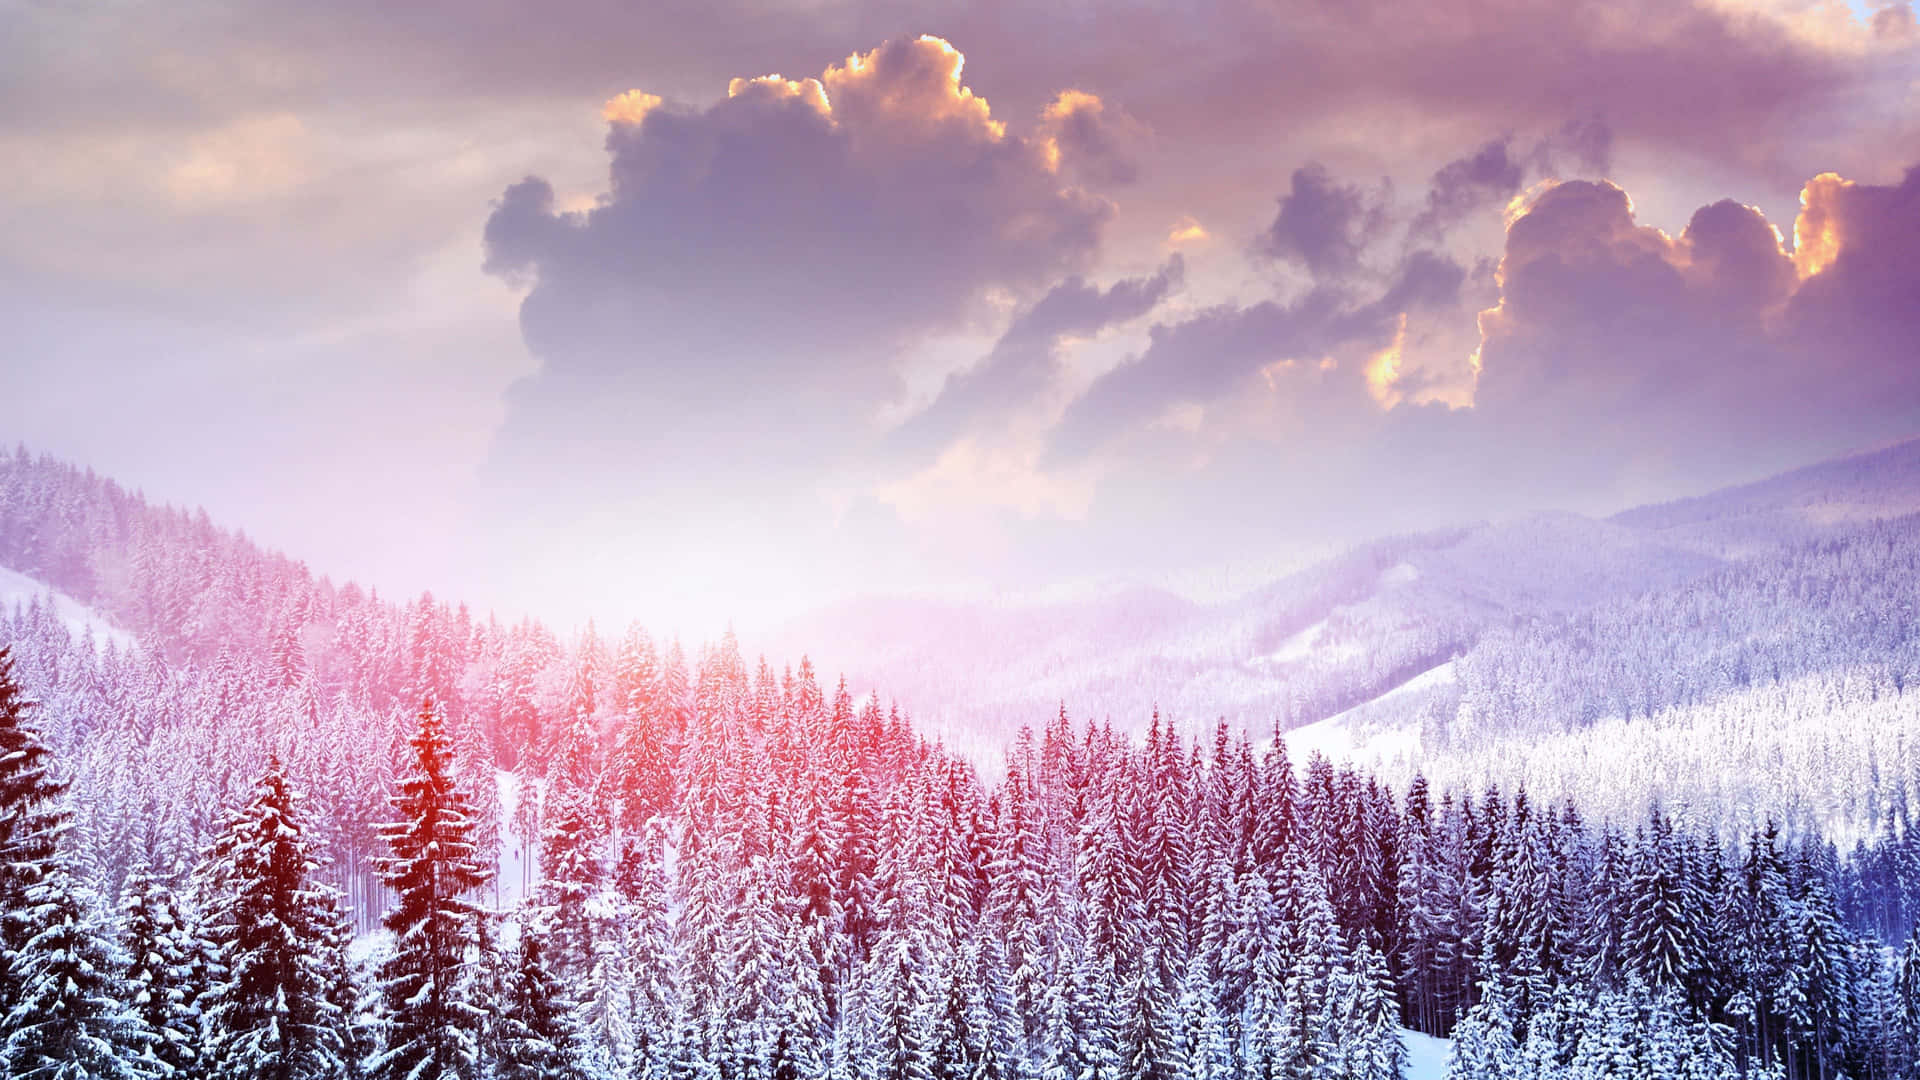 Tranquil Snowy Landscape during Winter Season Wallpaper